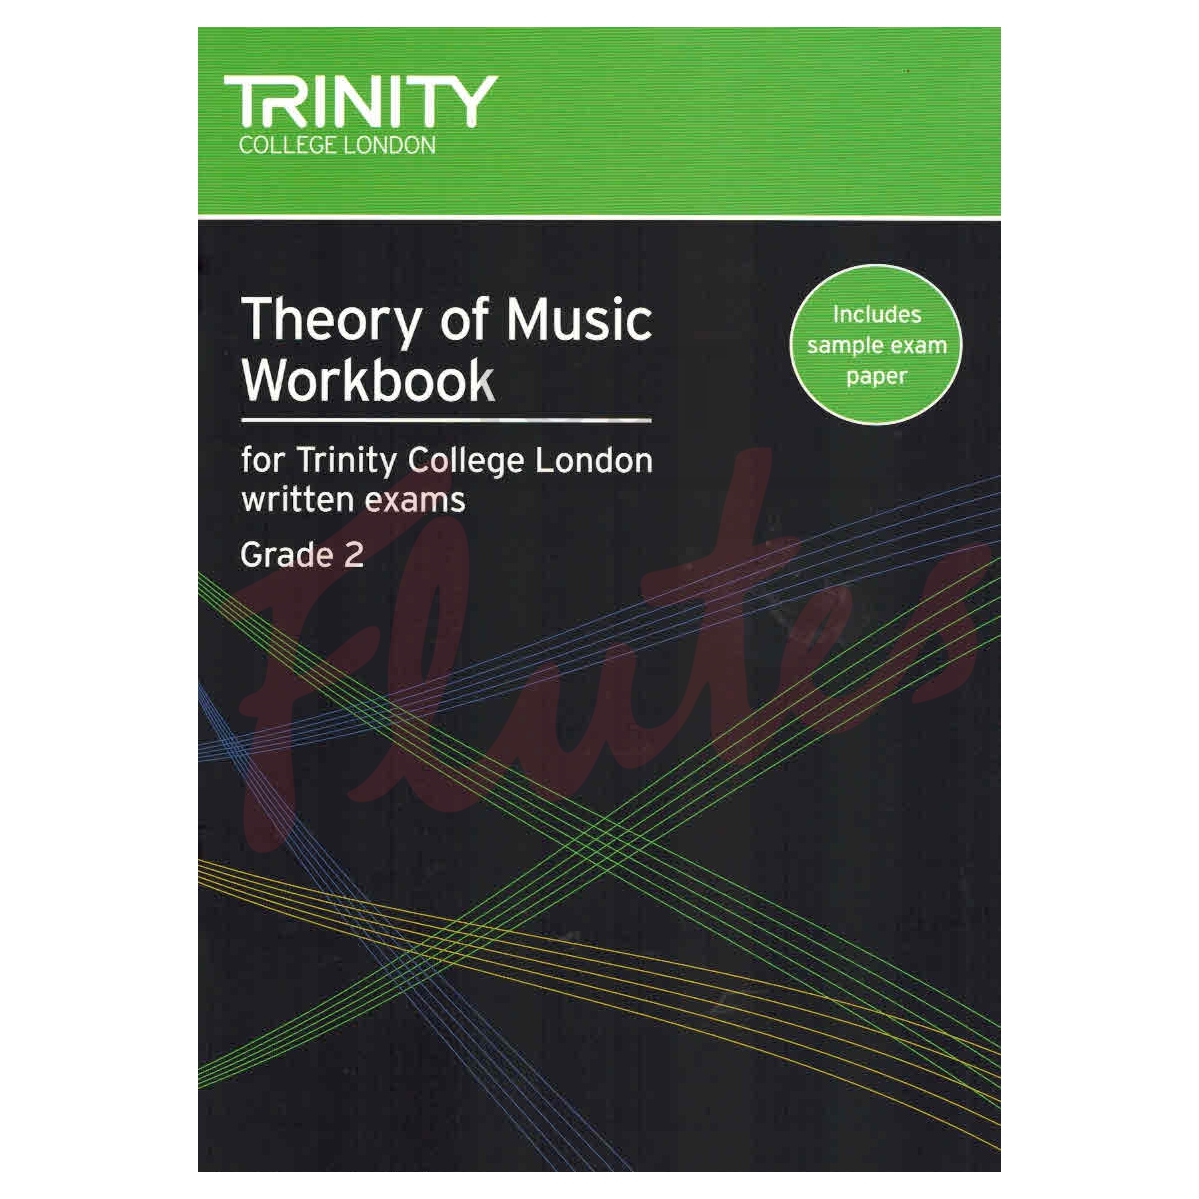 Theory of Music Workbook, Grade 2